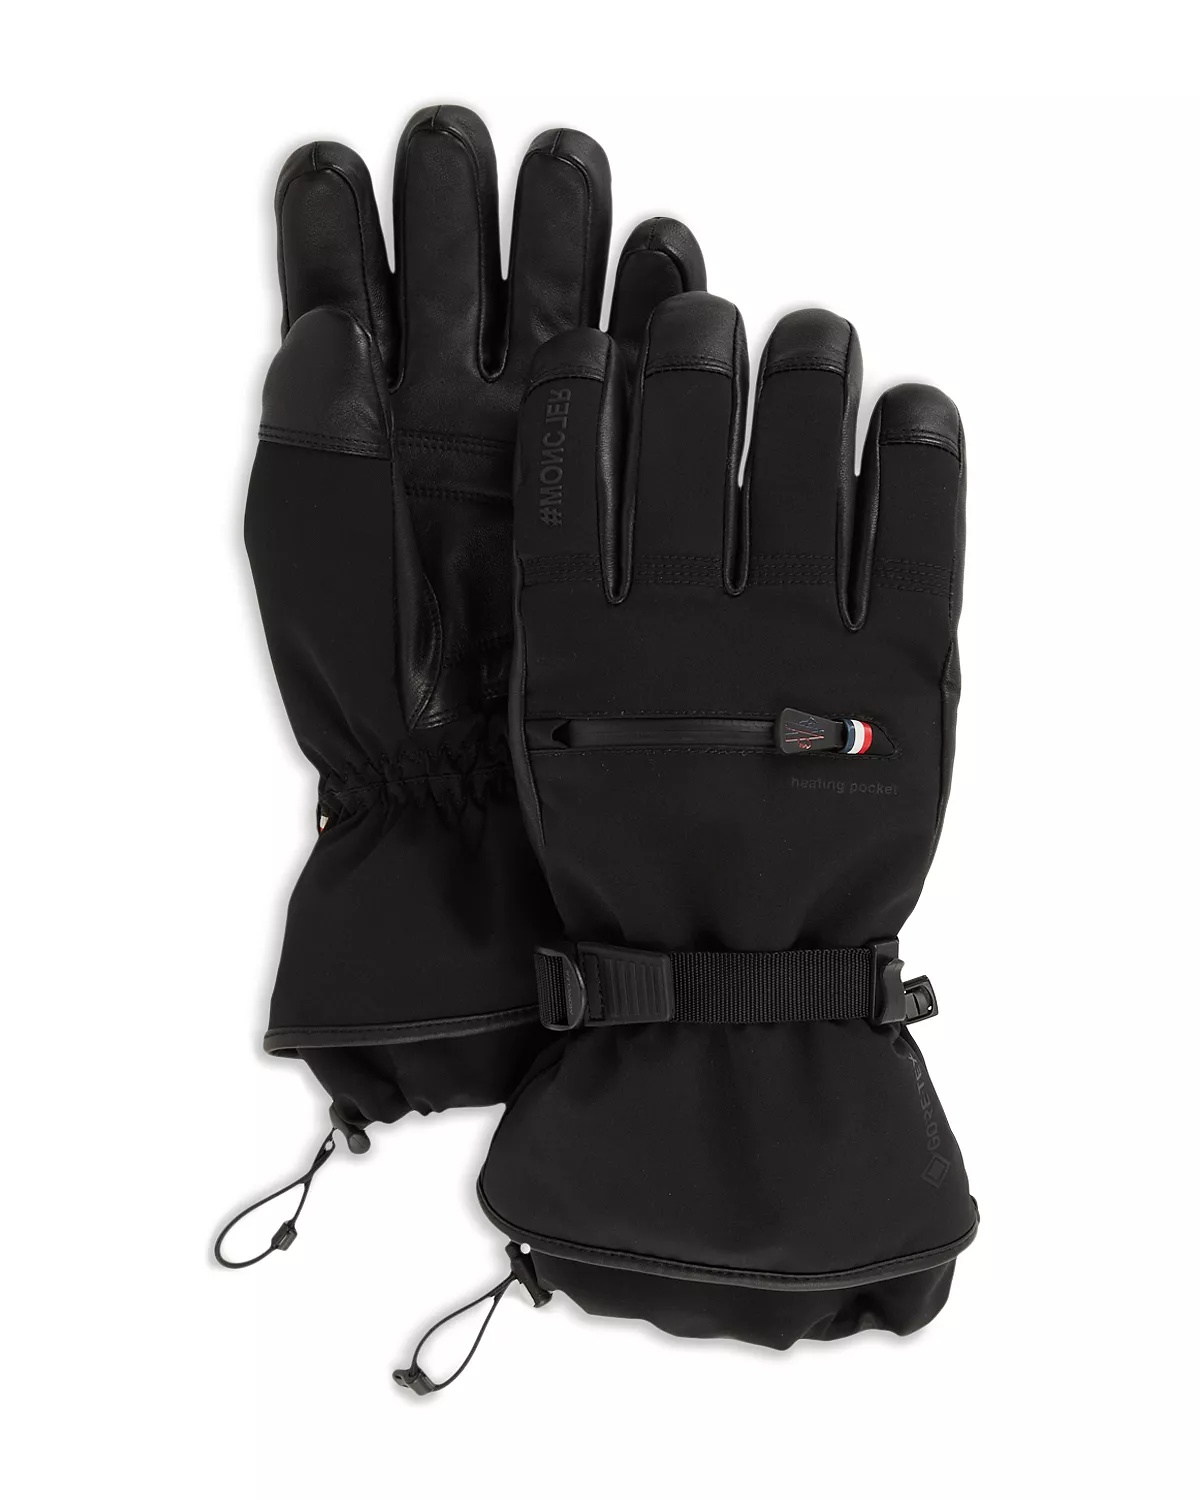 Heat Pocket Gloves - 1